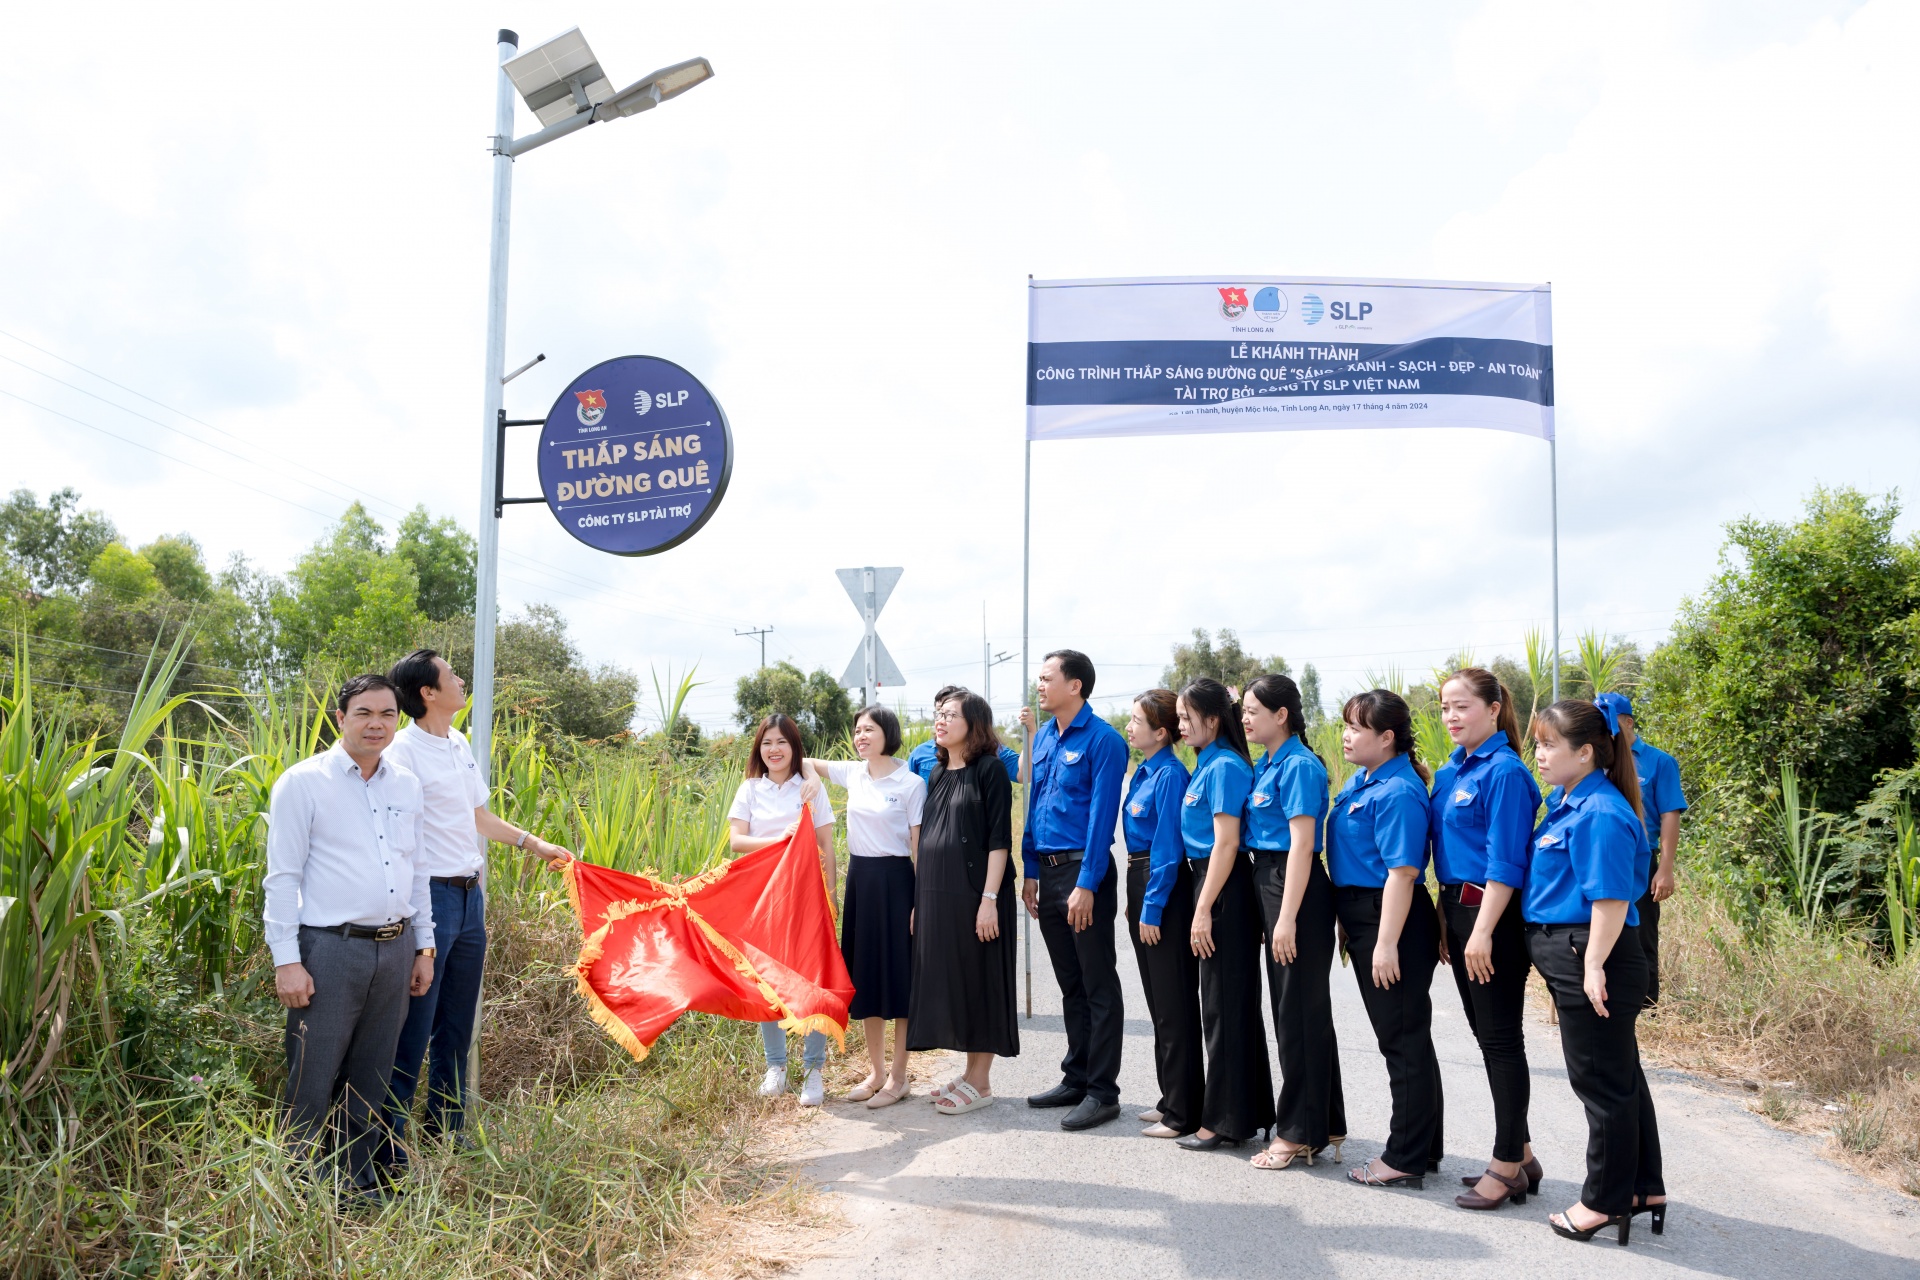 SLP Vietnam inaugurates rural road solar lighting project in Long An